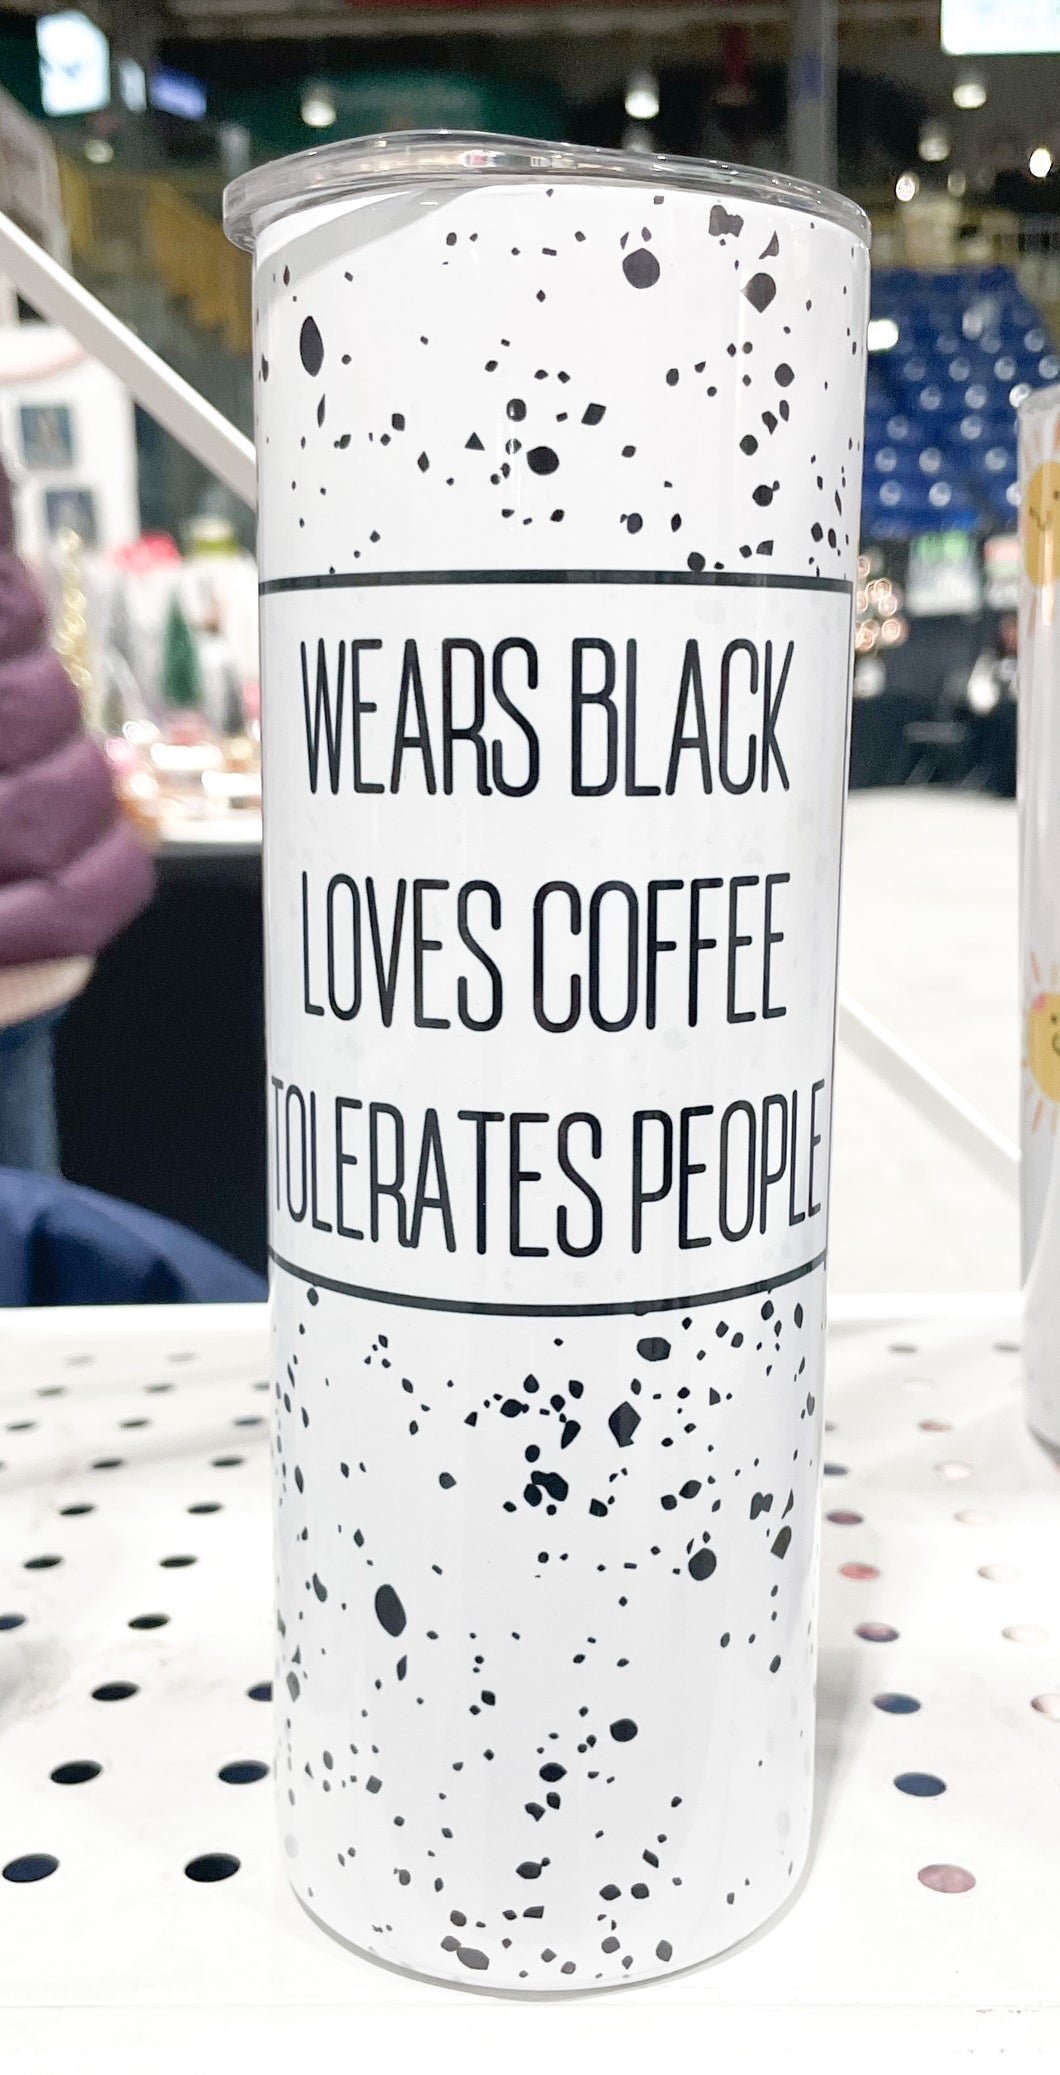 Wears Black, Loves Coffee, Tolerates People